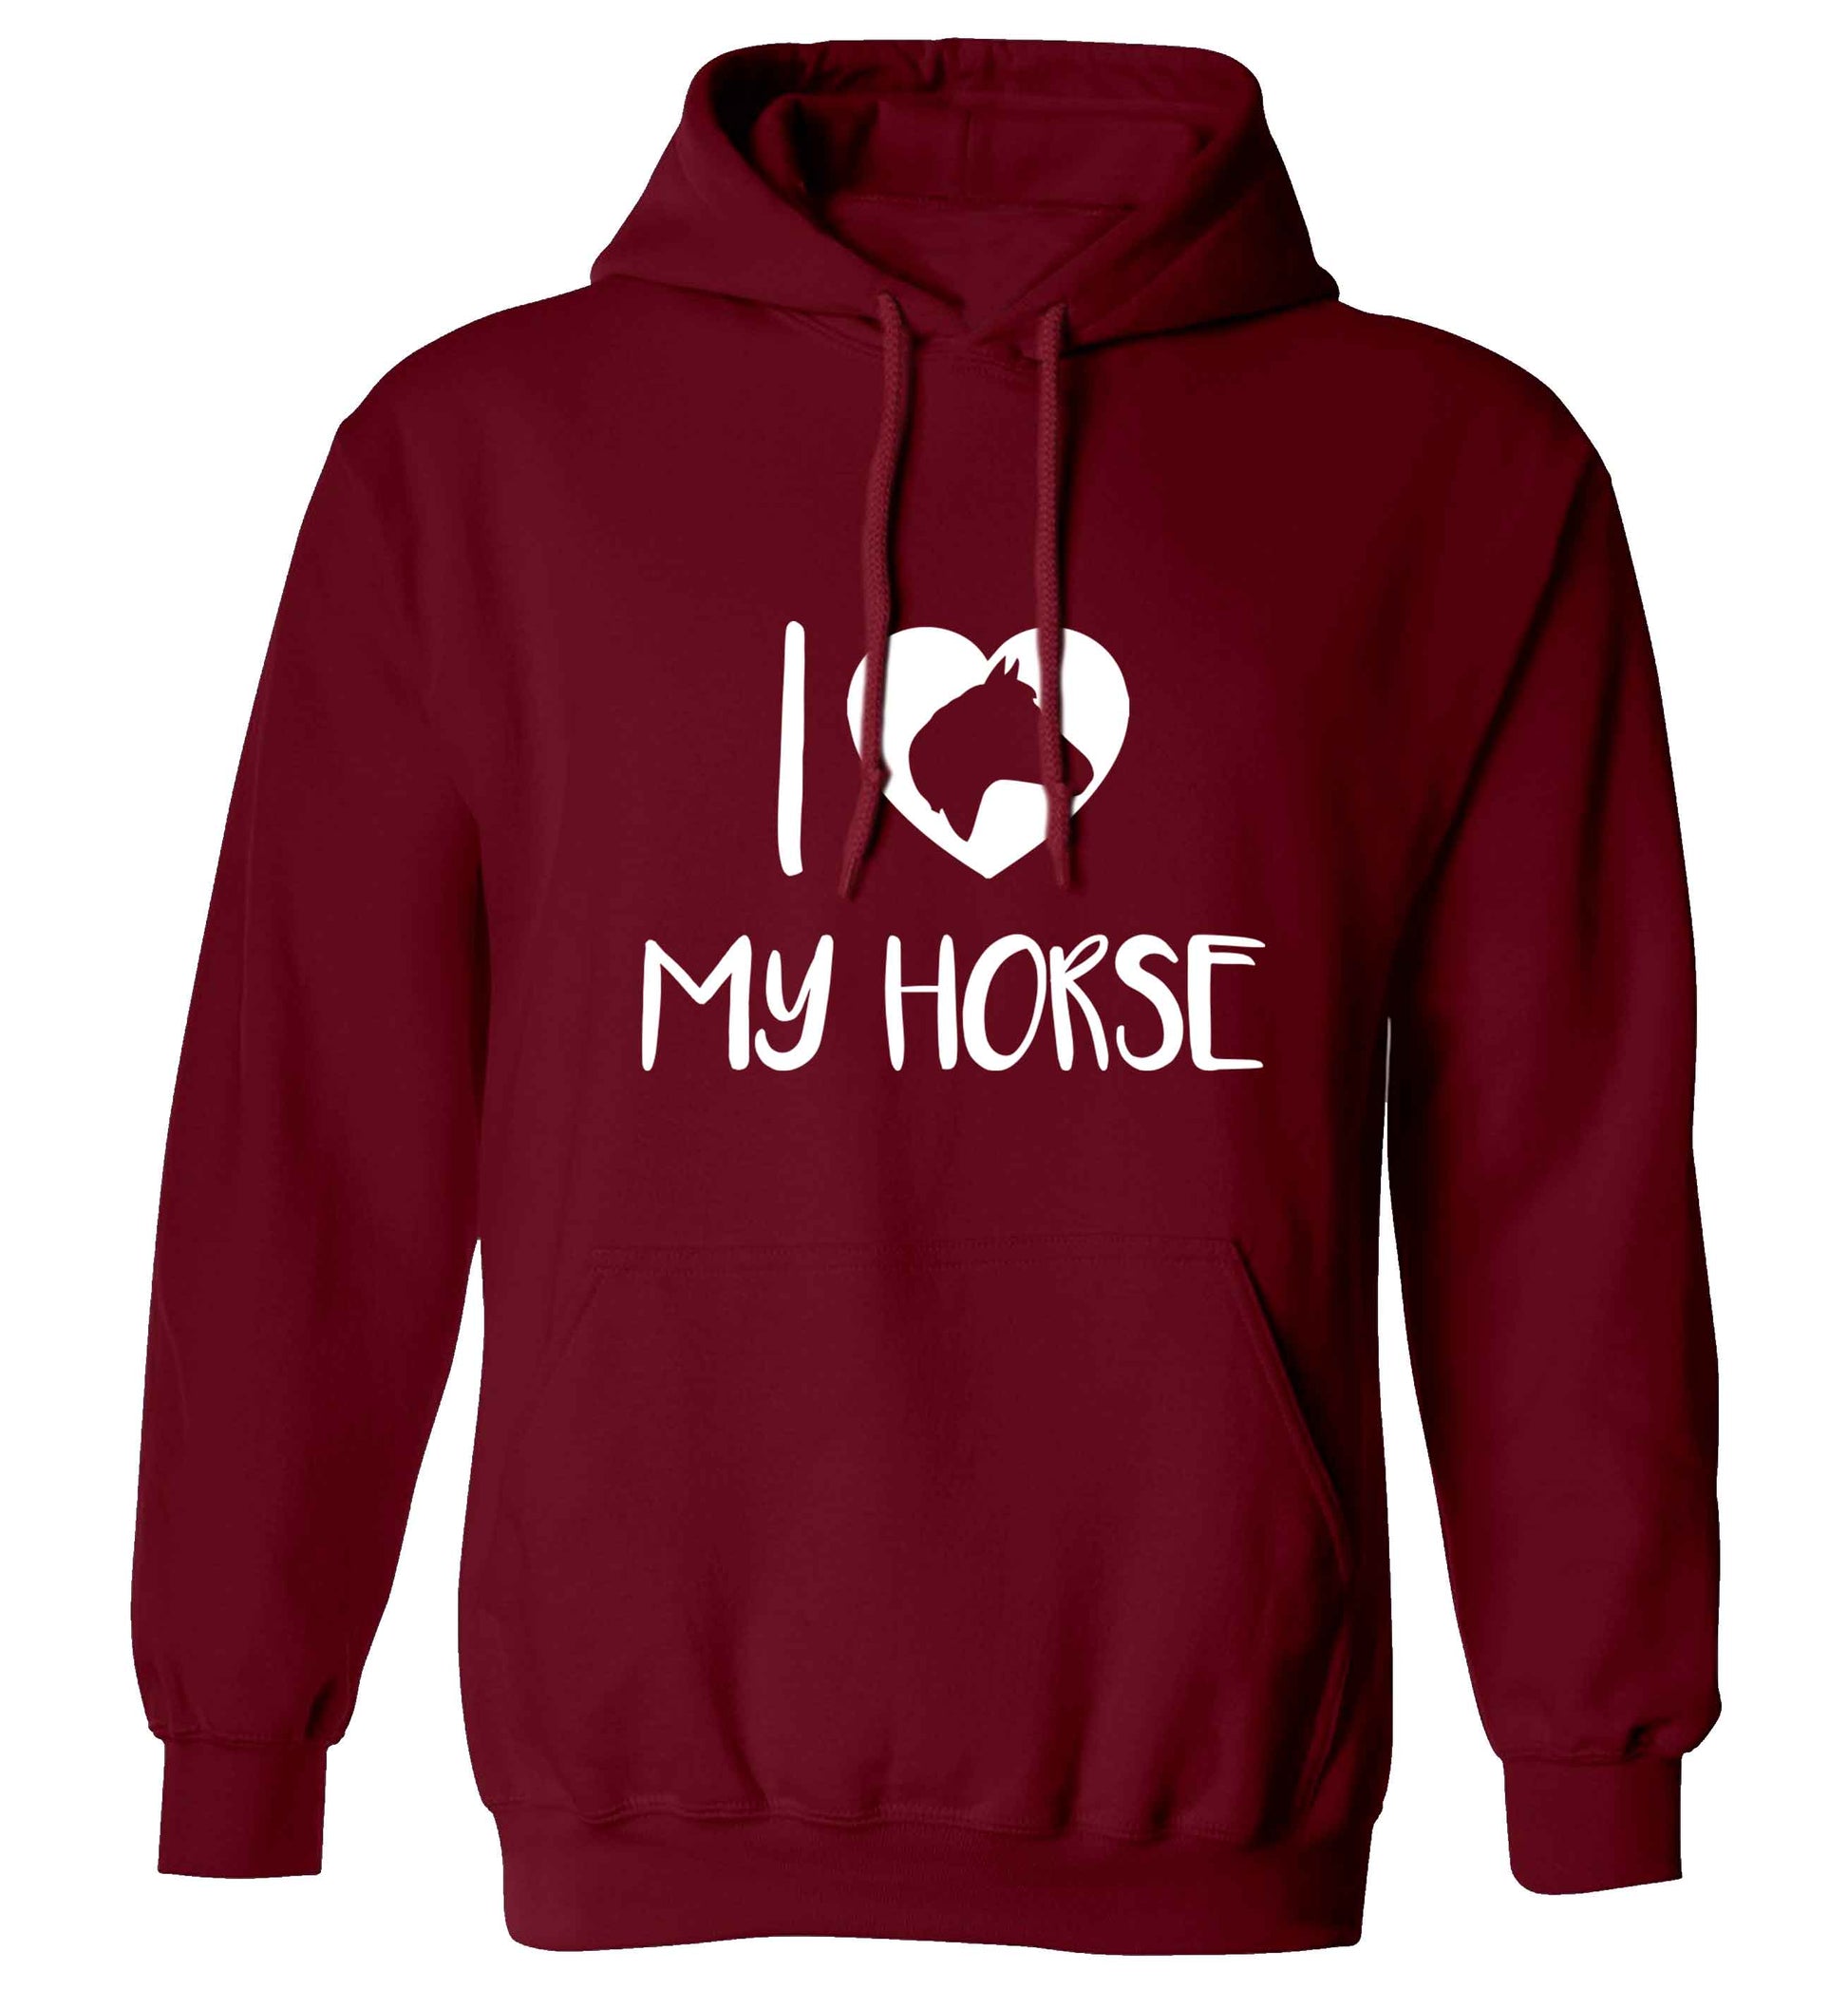 I love my horse adults unisex maroon hoodie 2XL